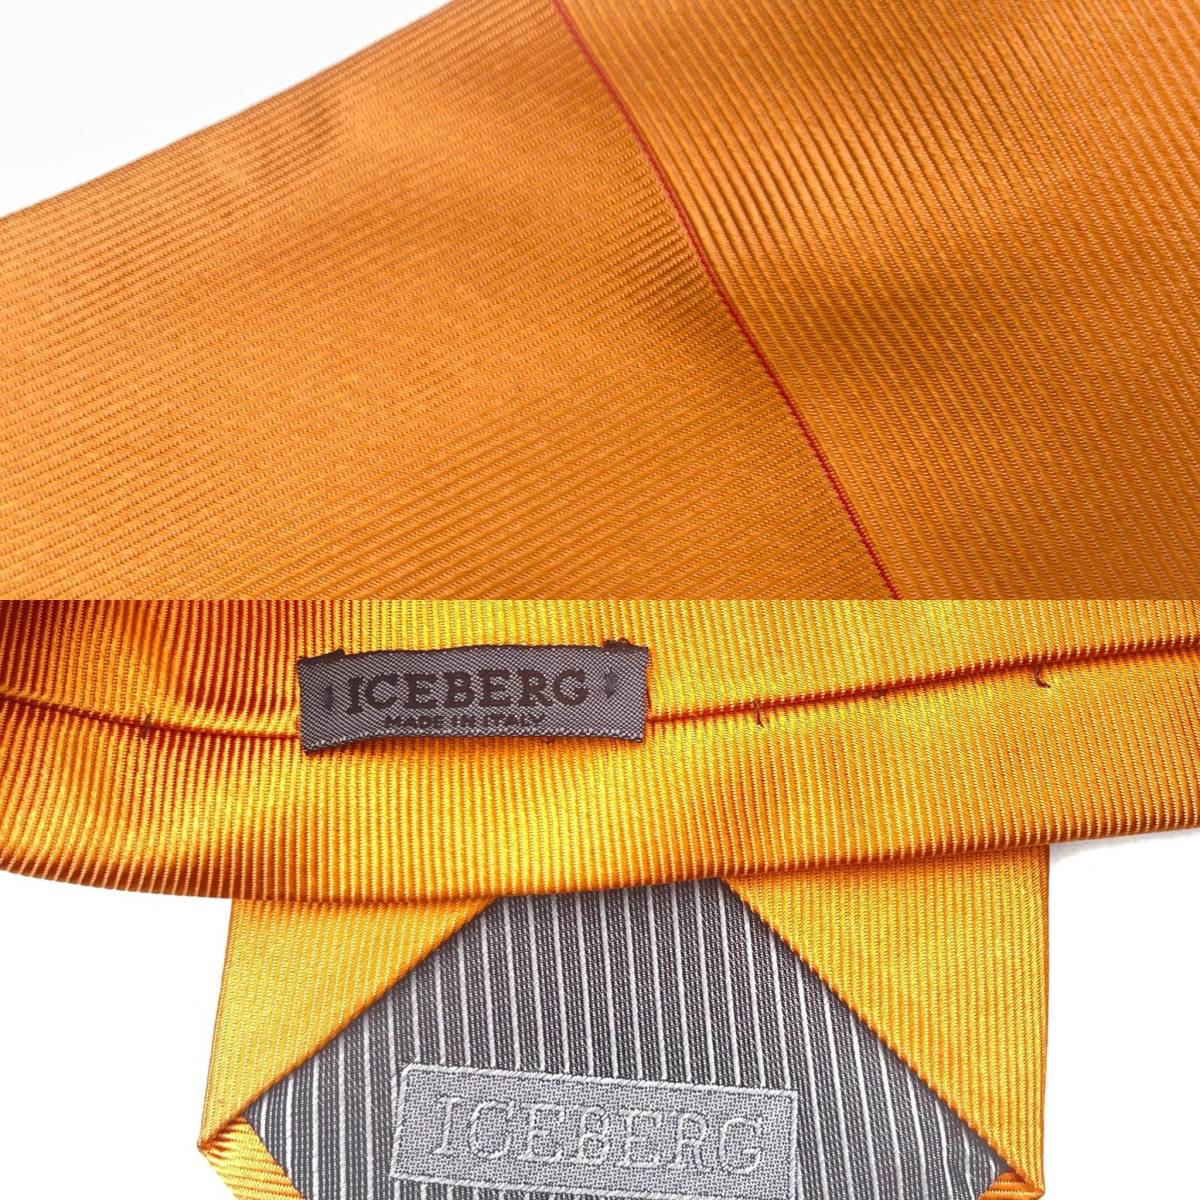 [ profit ] Iceberg design silk necktie ICEBERG Italy made yellow orange series weave cloth series 